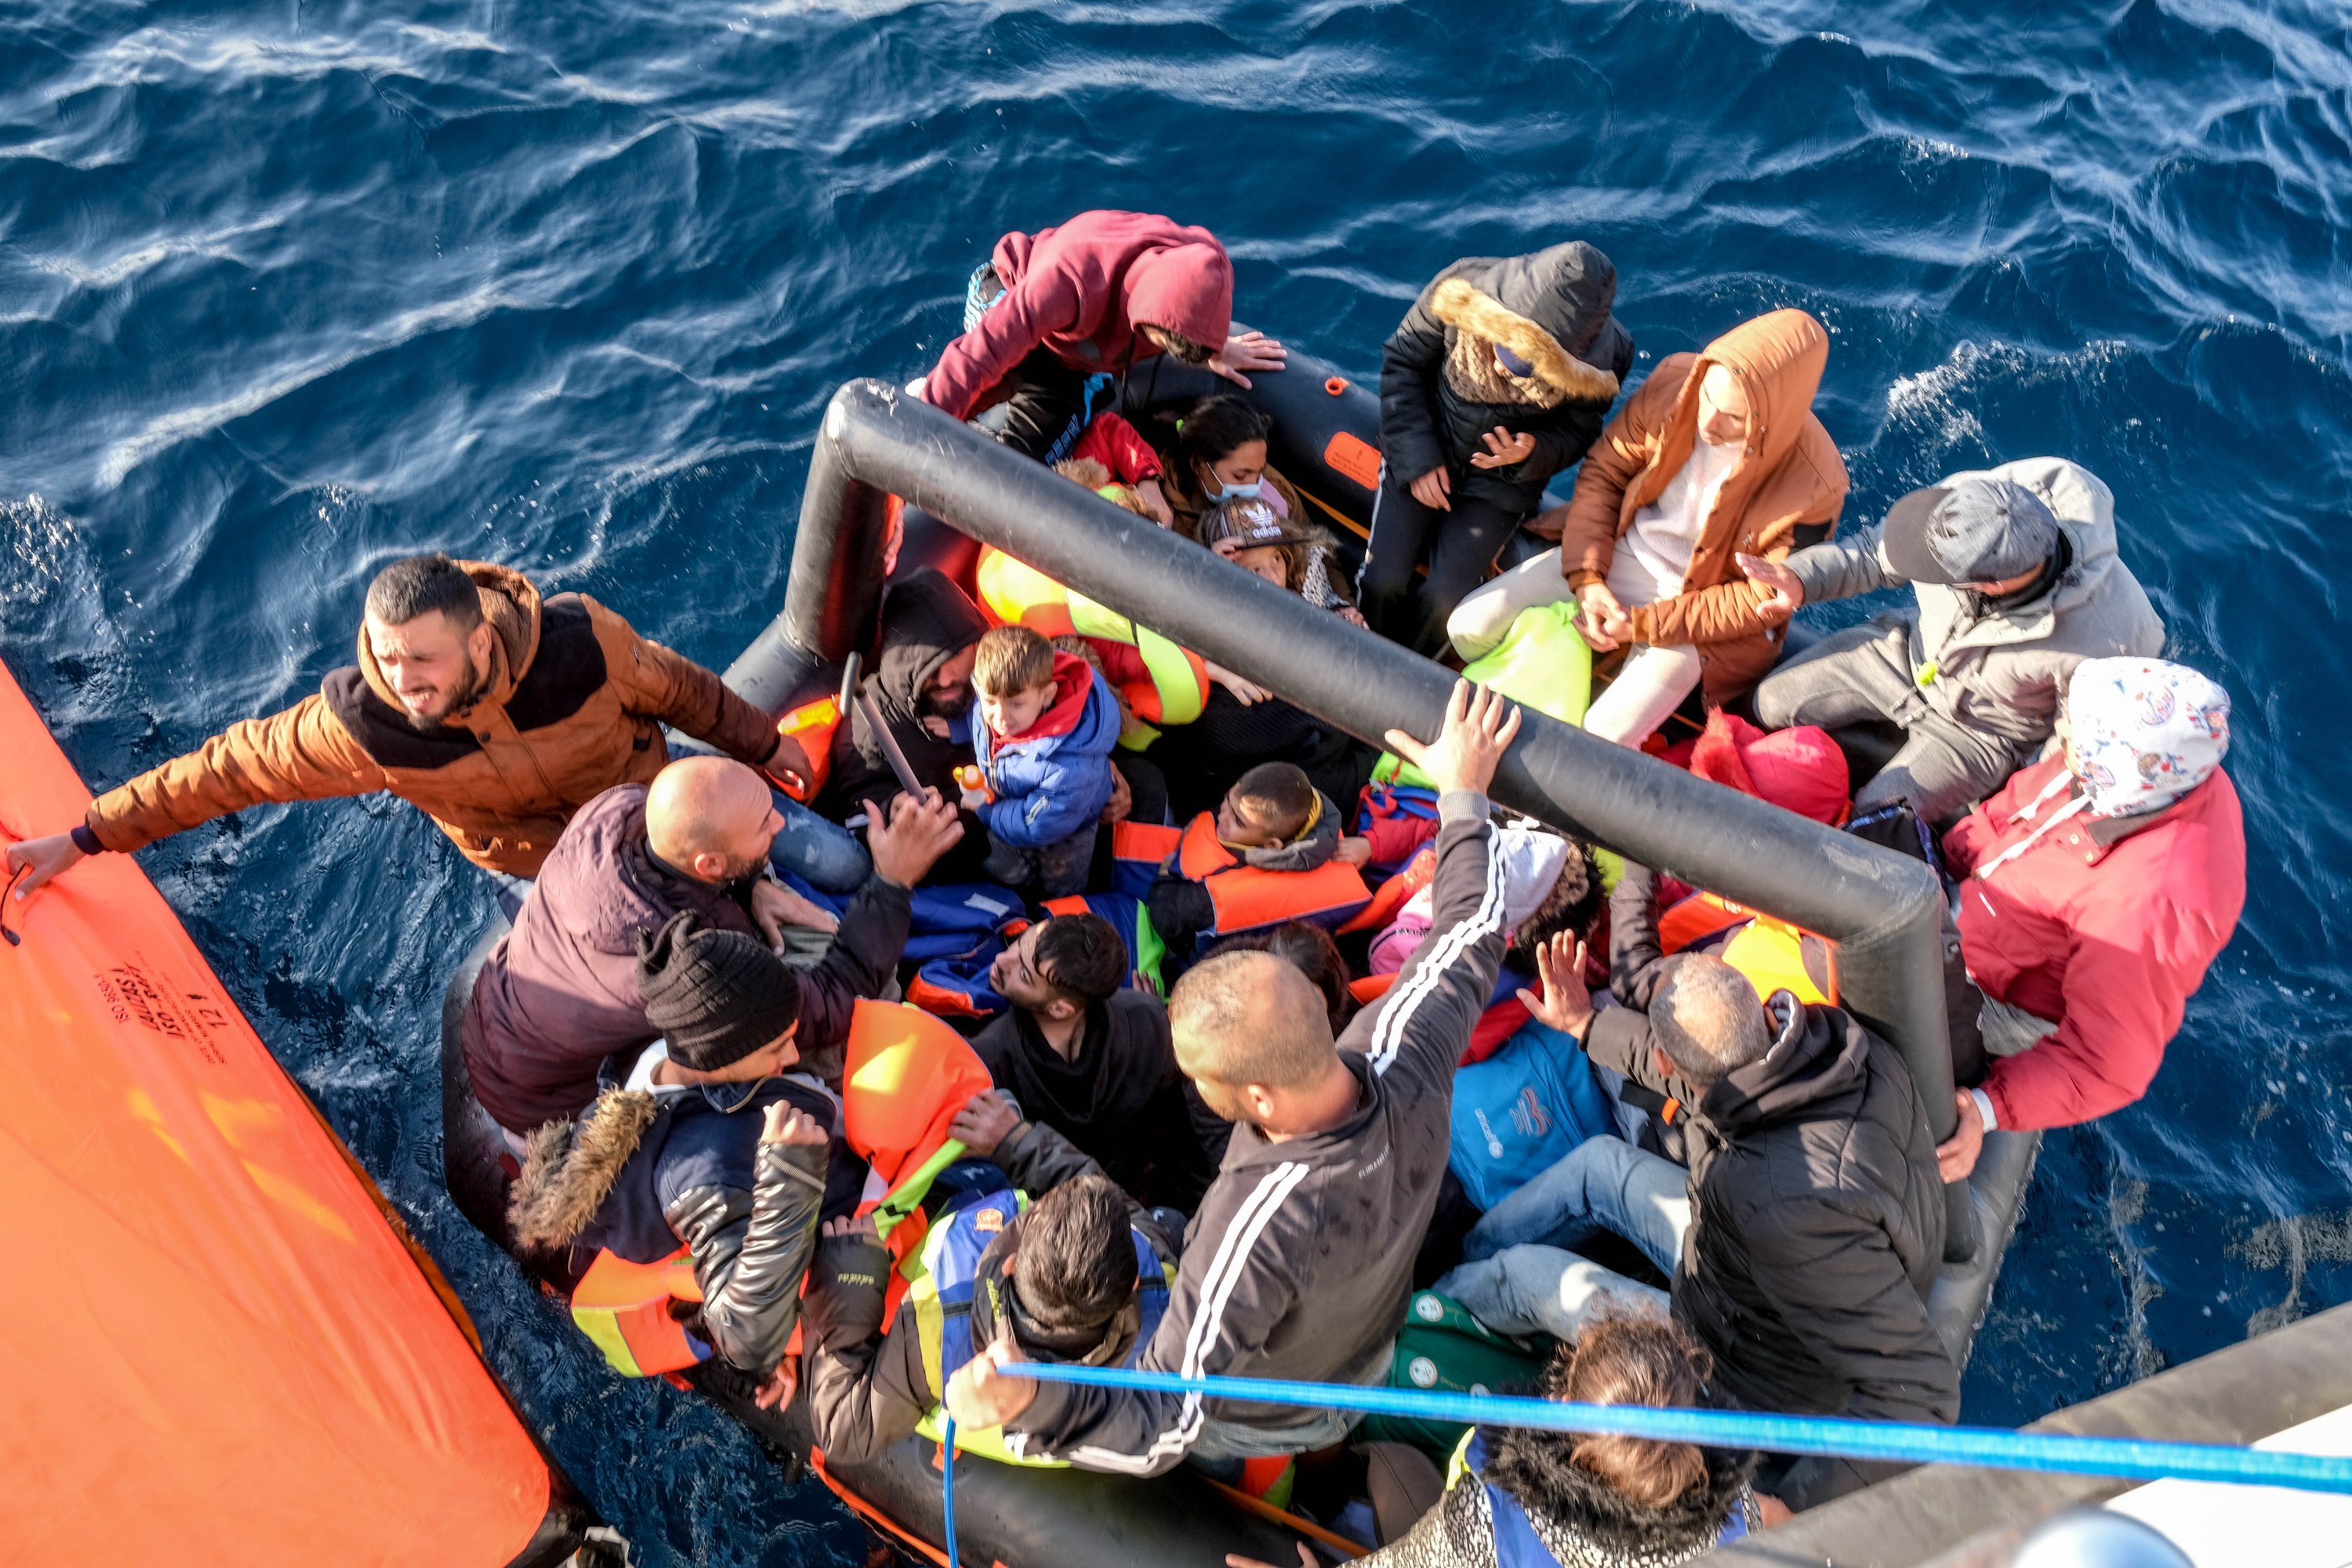 Migrants are rescued by Turkish coast guard units in the Aegean Sea, Turkey, Nov. 3, 2021. (Photo by Uğur Yıldırım)